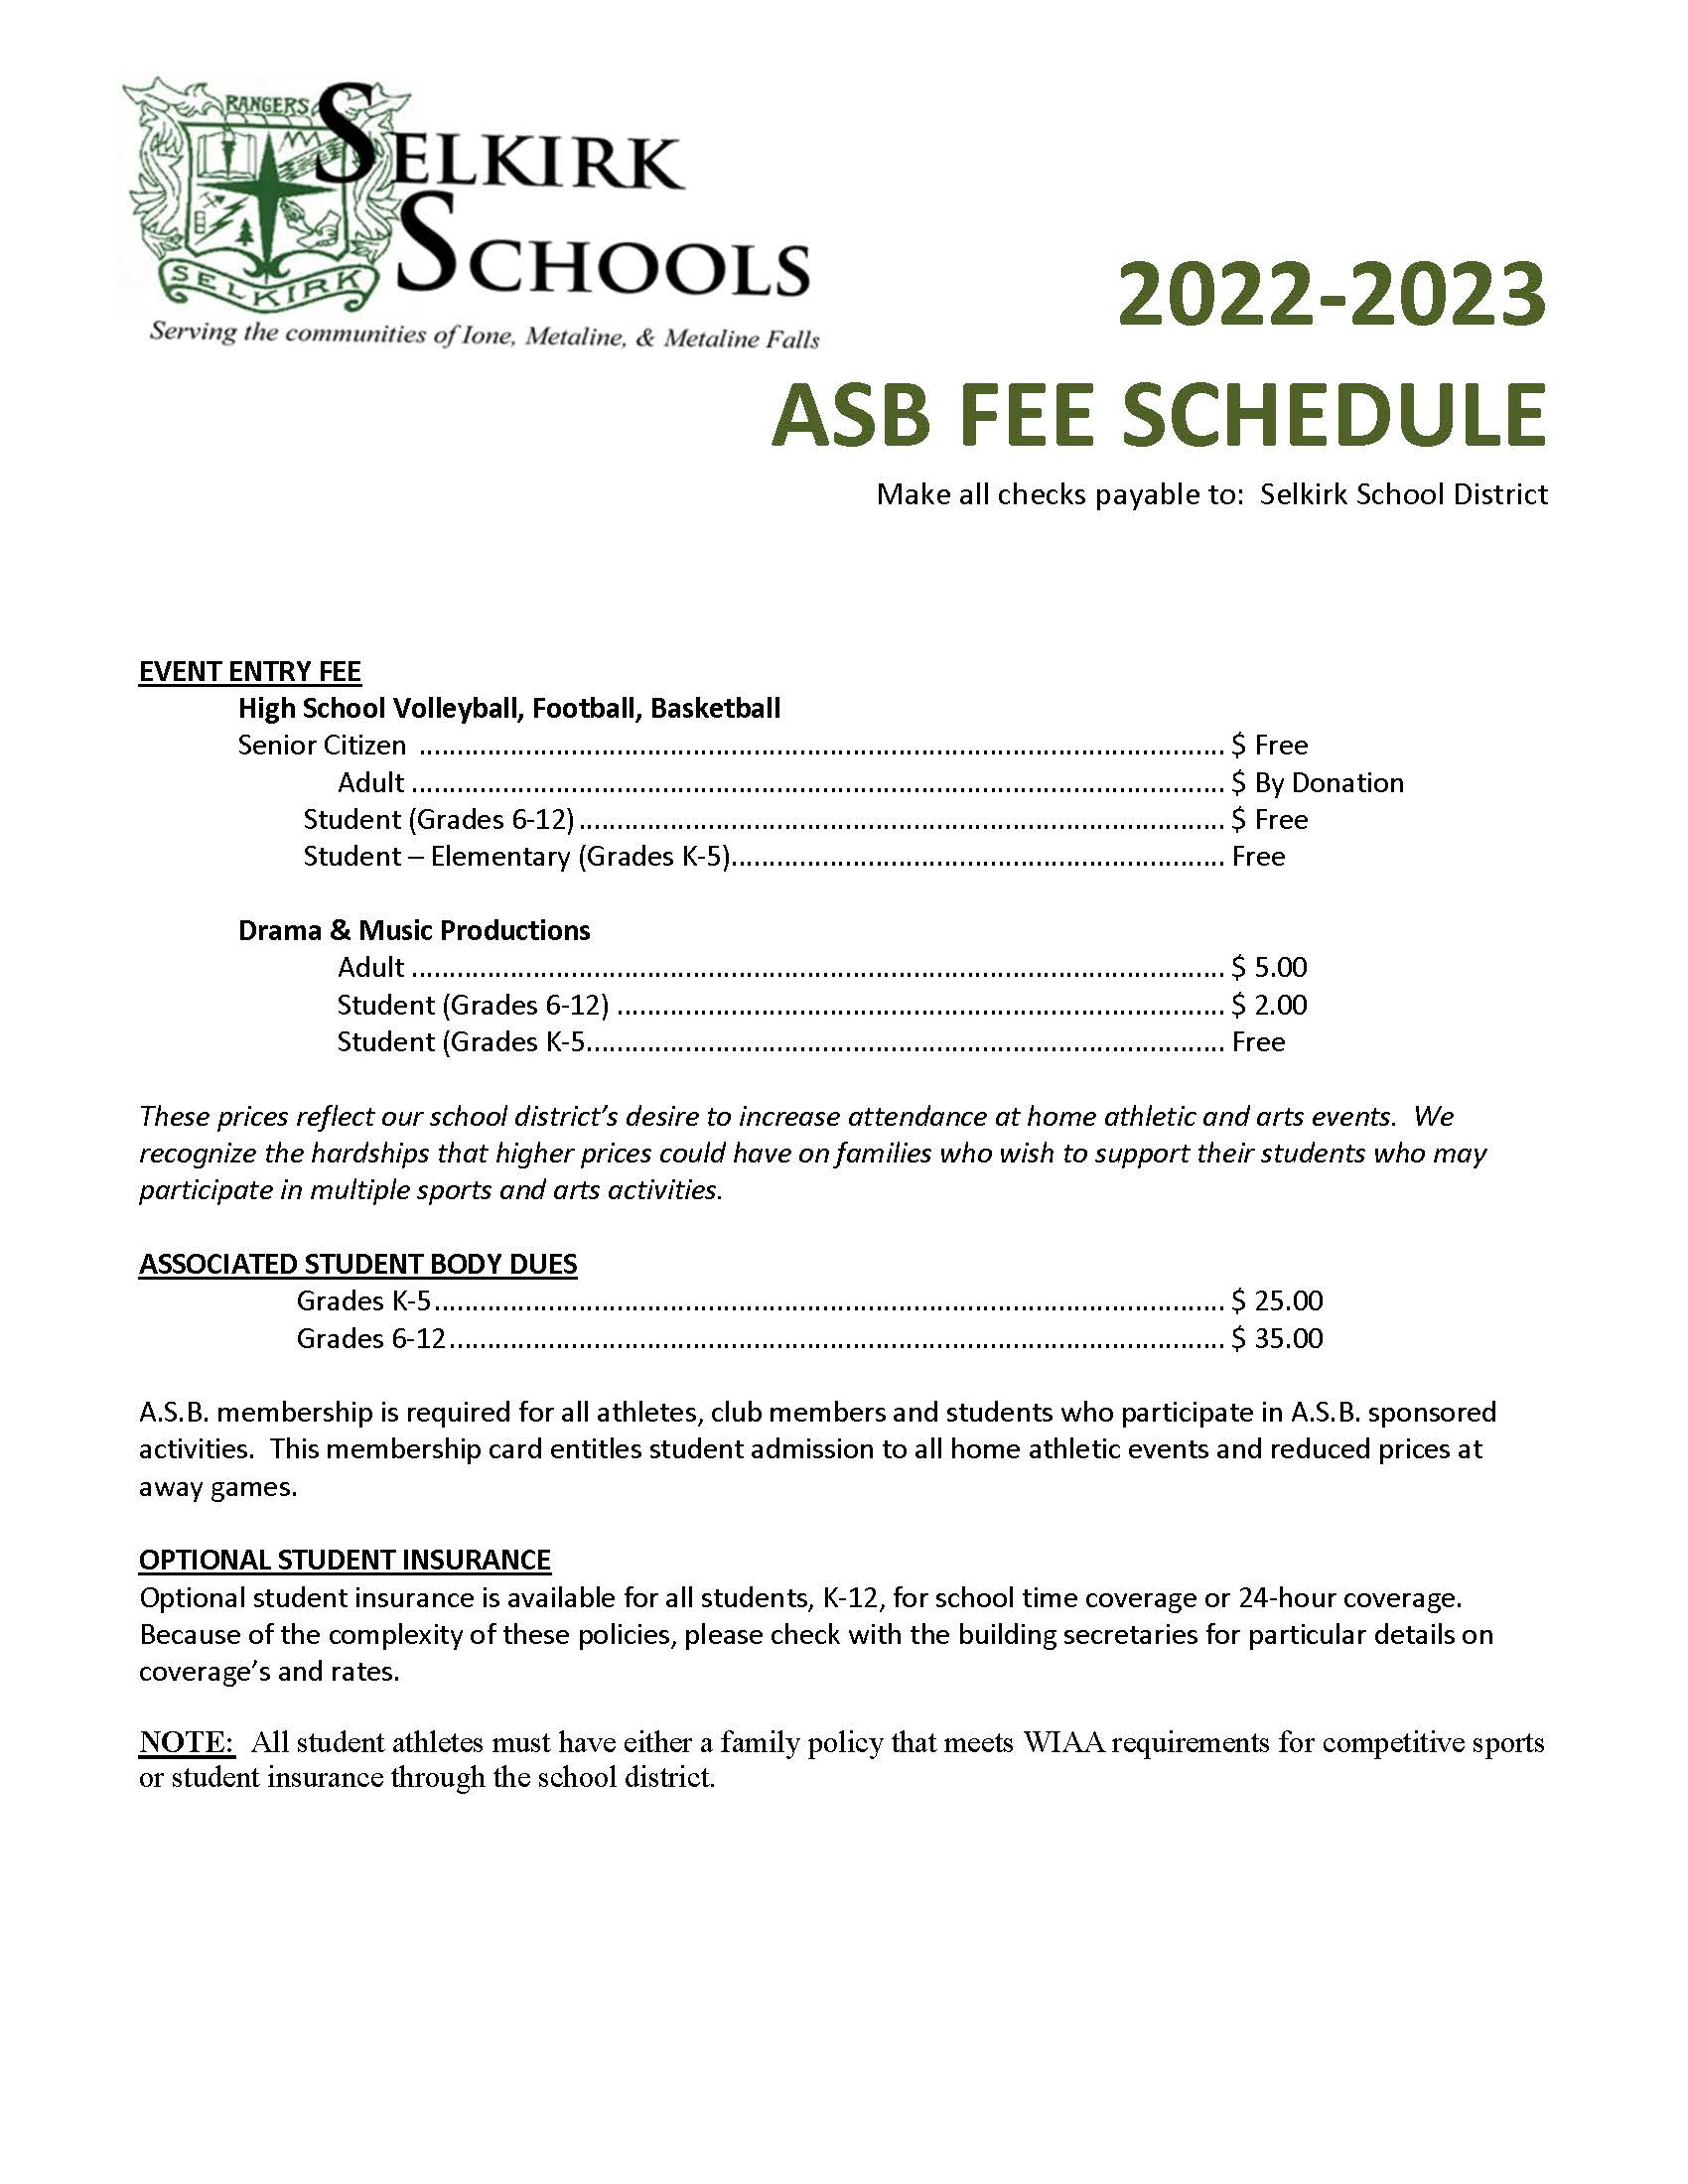 Fee Schedules Selkirk School District